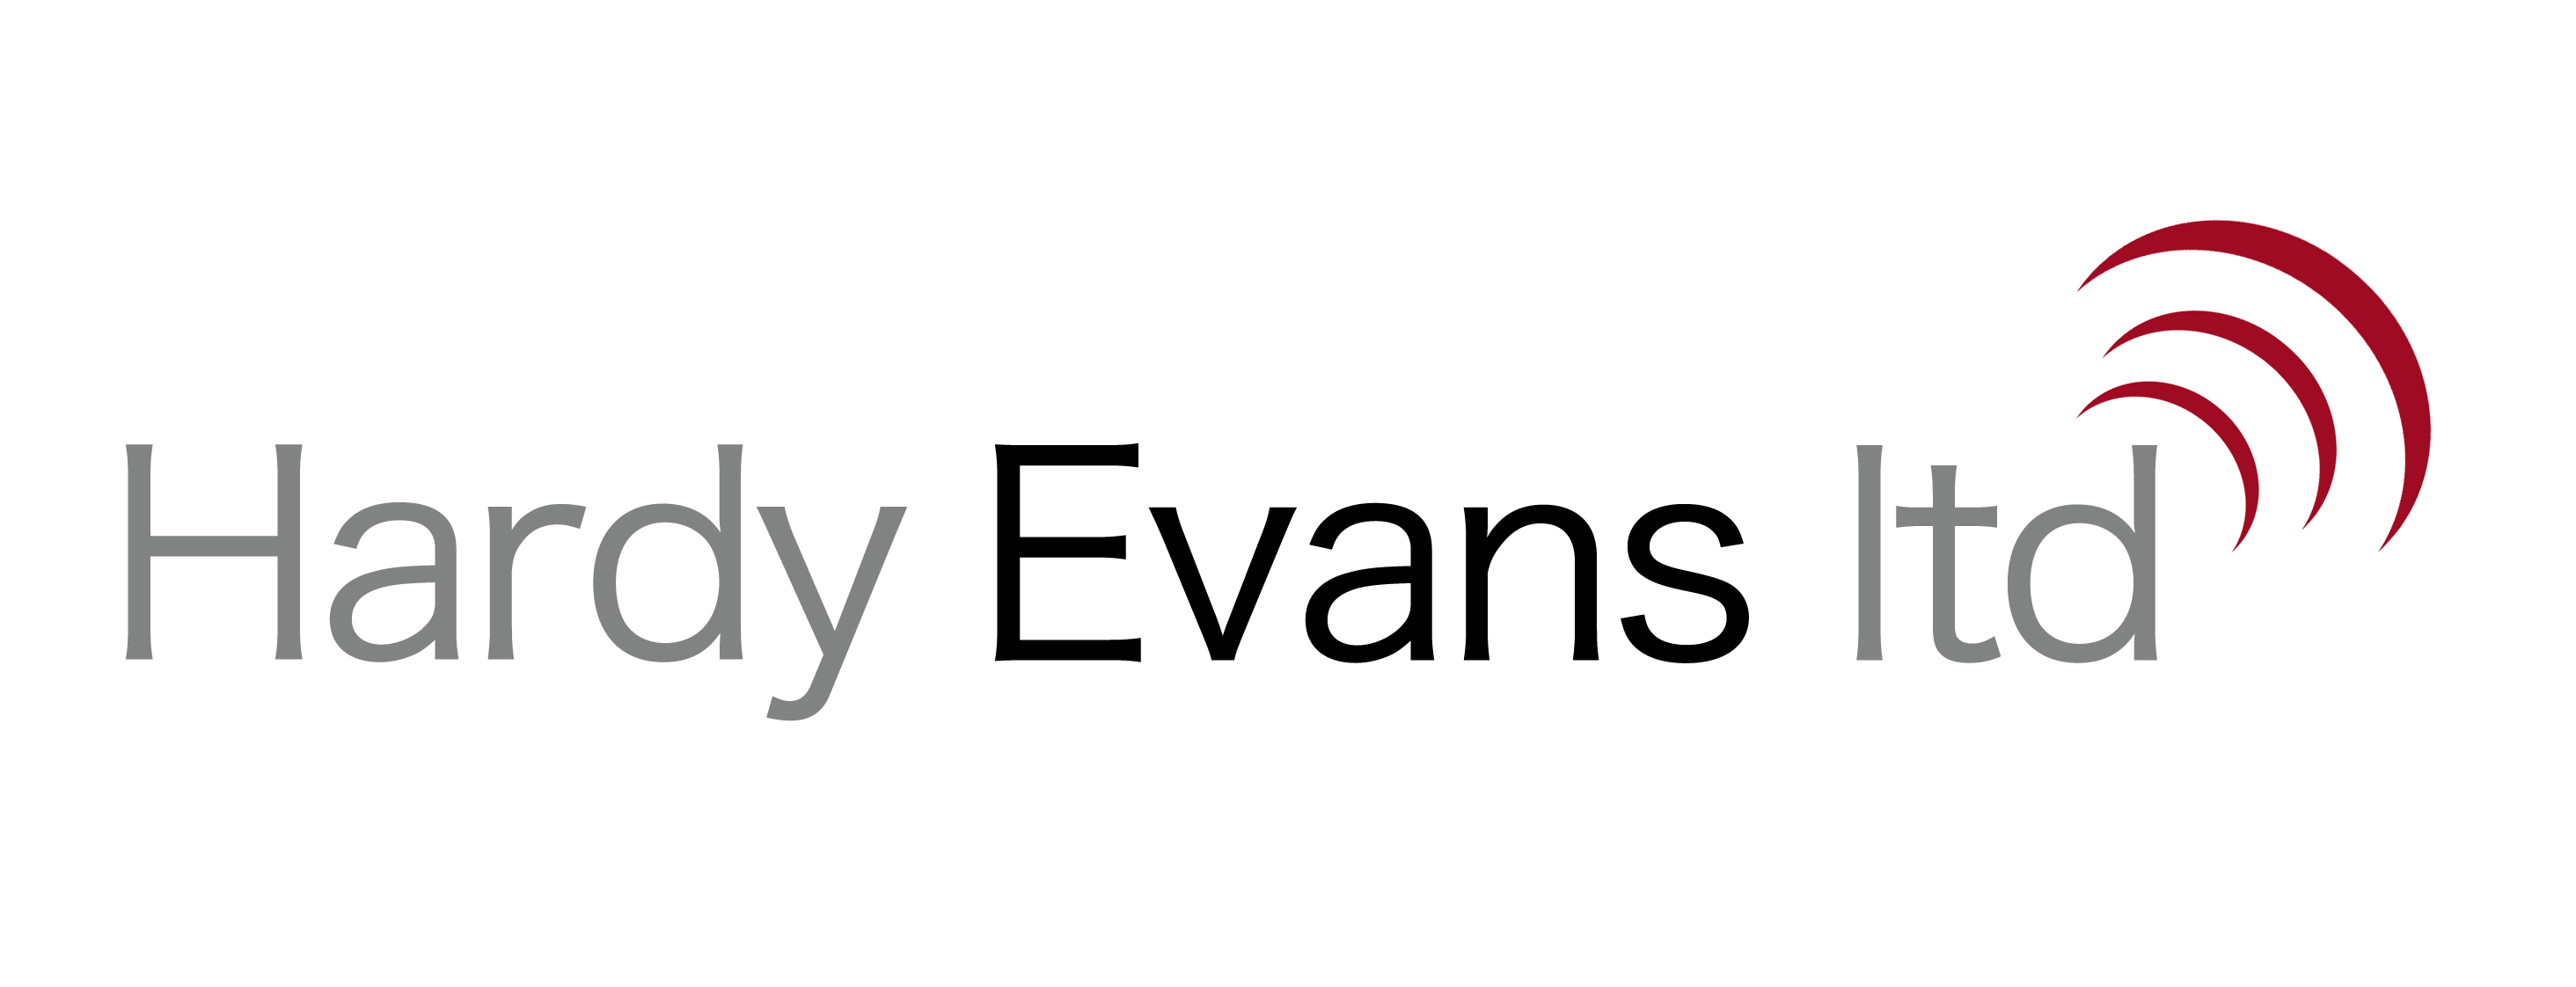 Hardy Evans Jobs